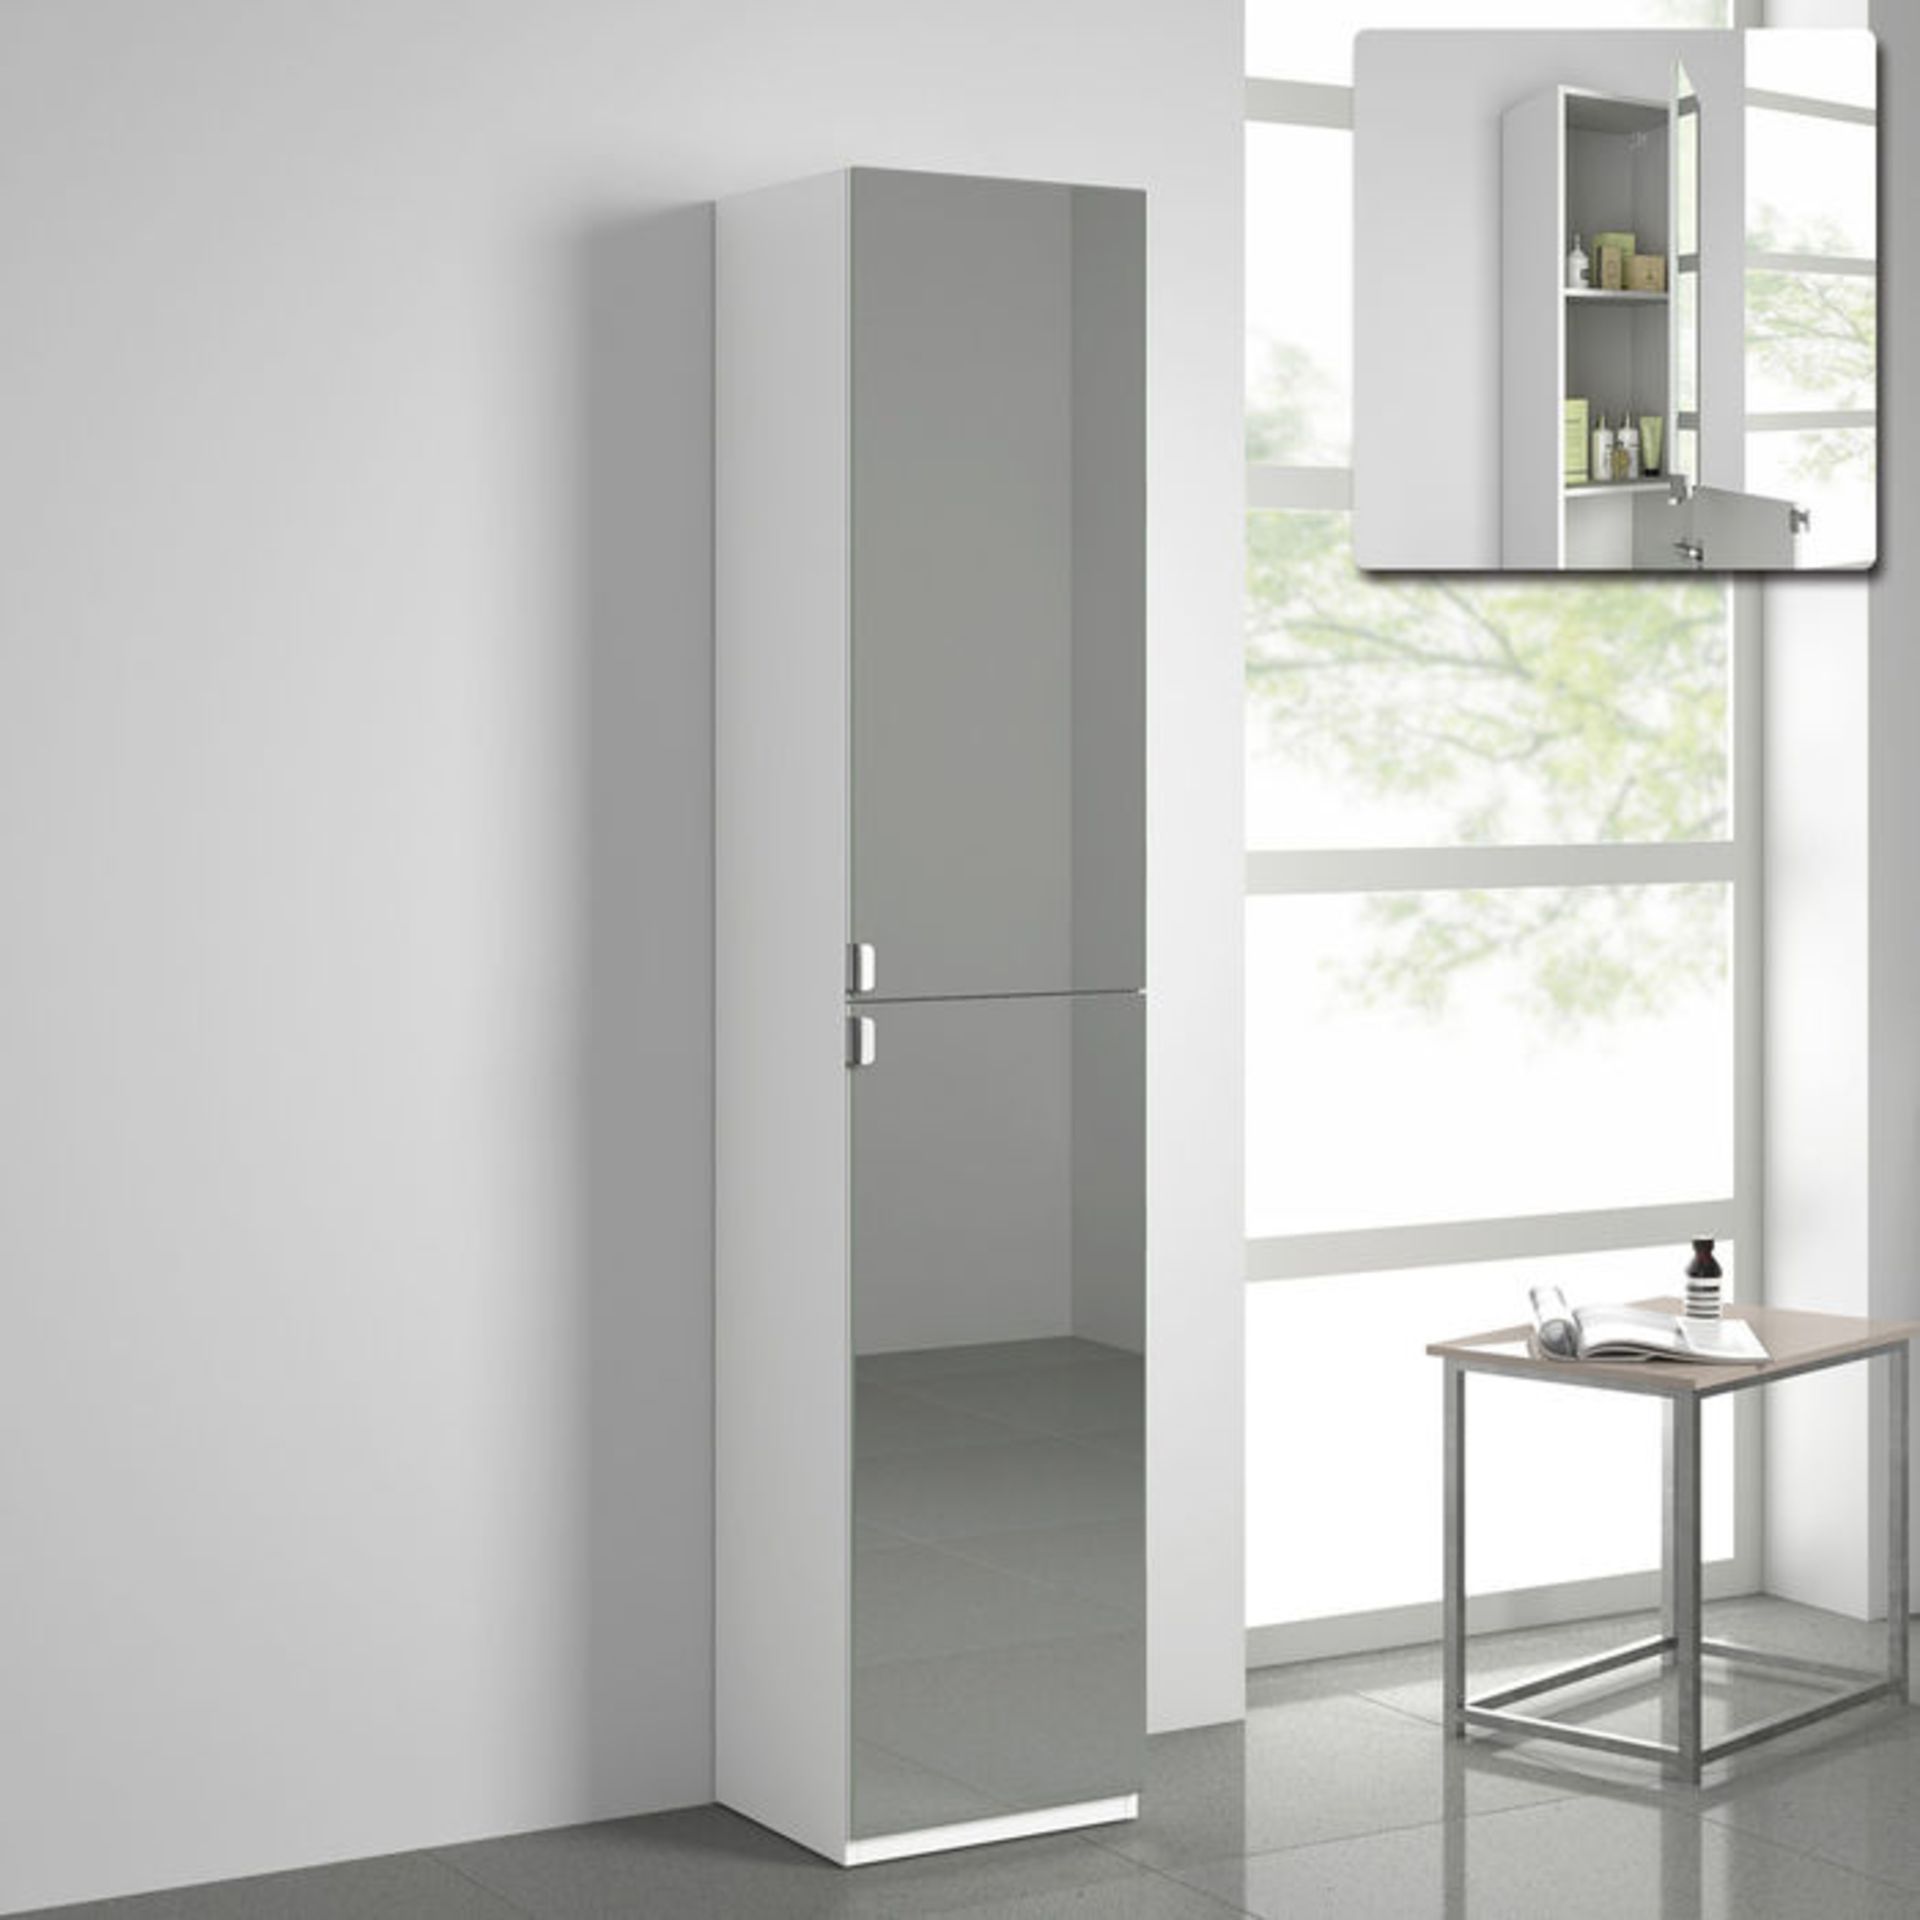 (TA172) 1700x350mm Mirrored Door Matte White Tall Storage Cabinet - Floor Standing. RRP £249.99.